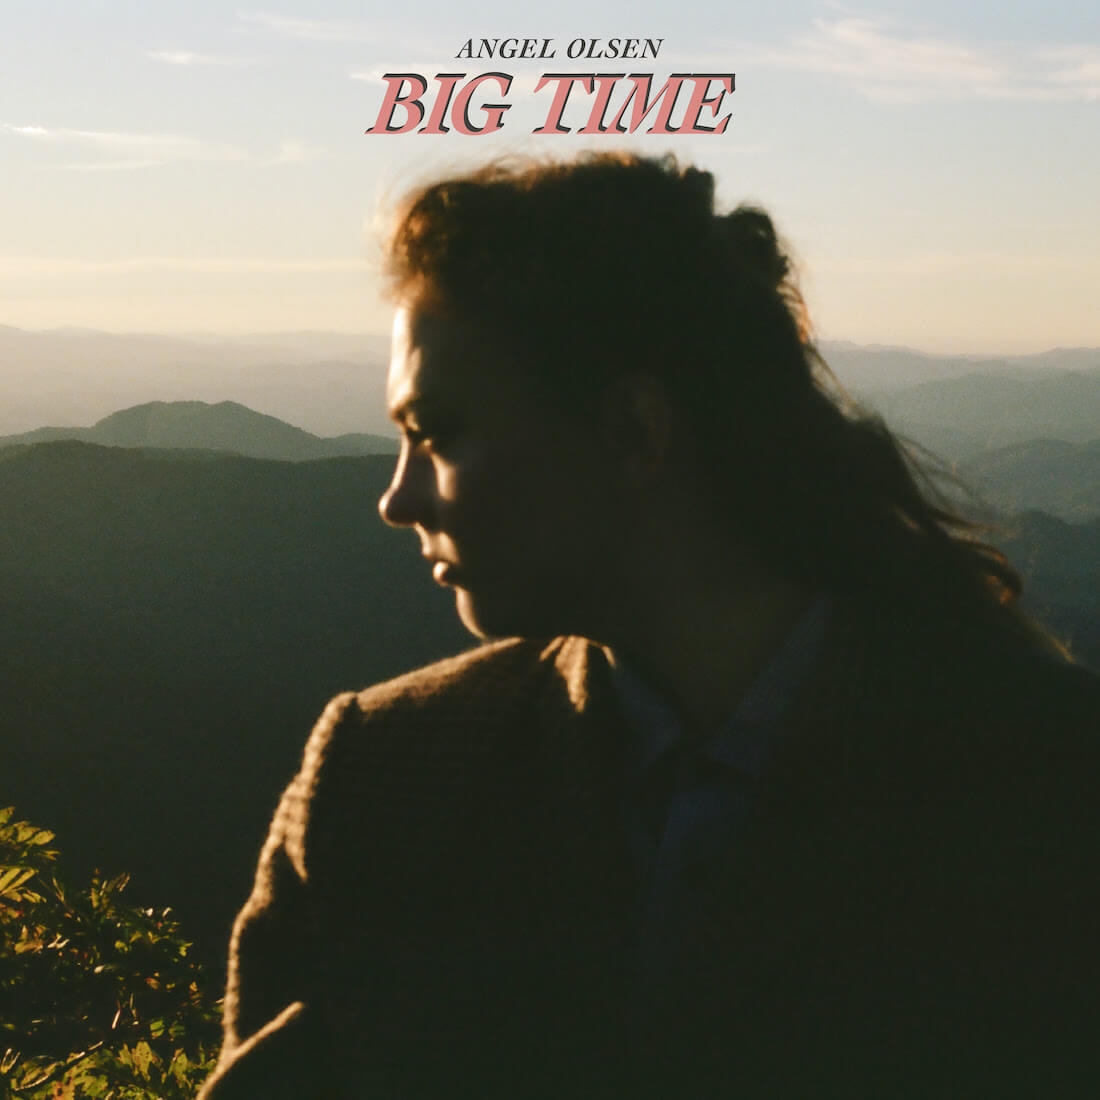 Big Time by Angel Olsen Album Review by Adam Fink. The singer/songwriter's full-length drops on June 3rd 2022, via Jagjaguwar